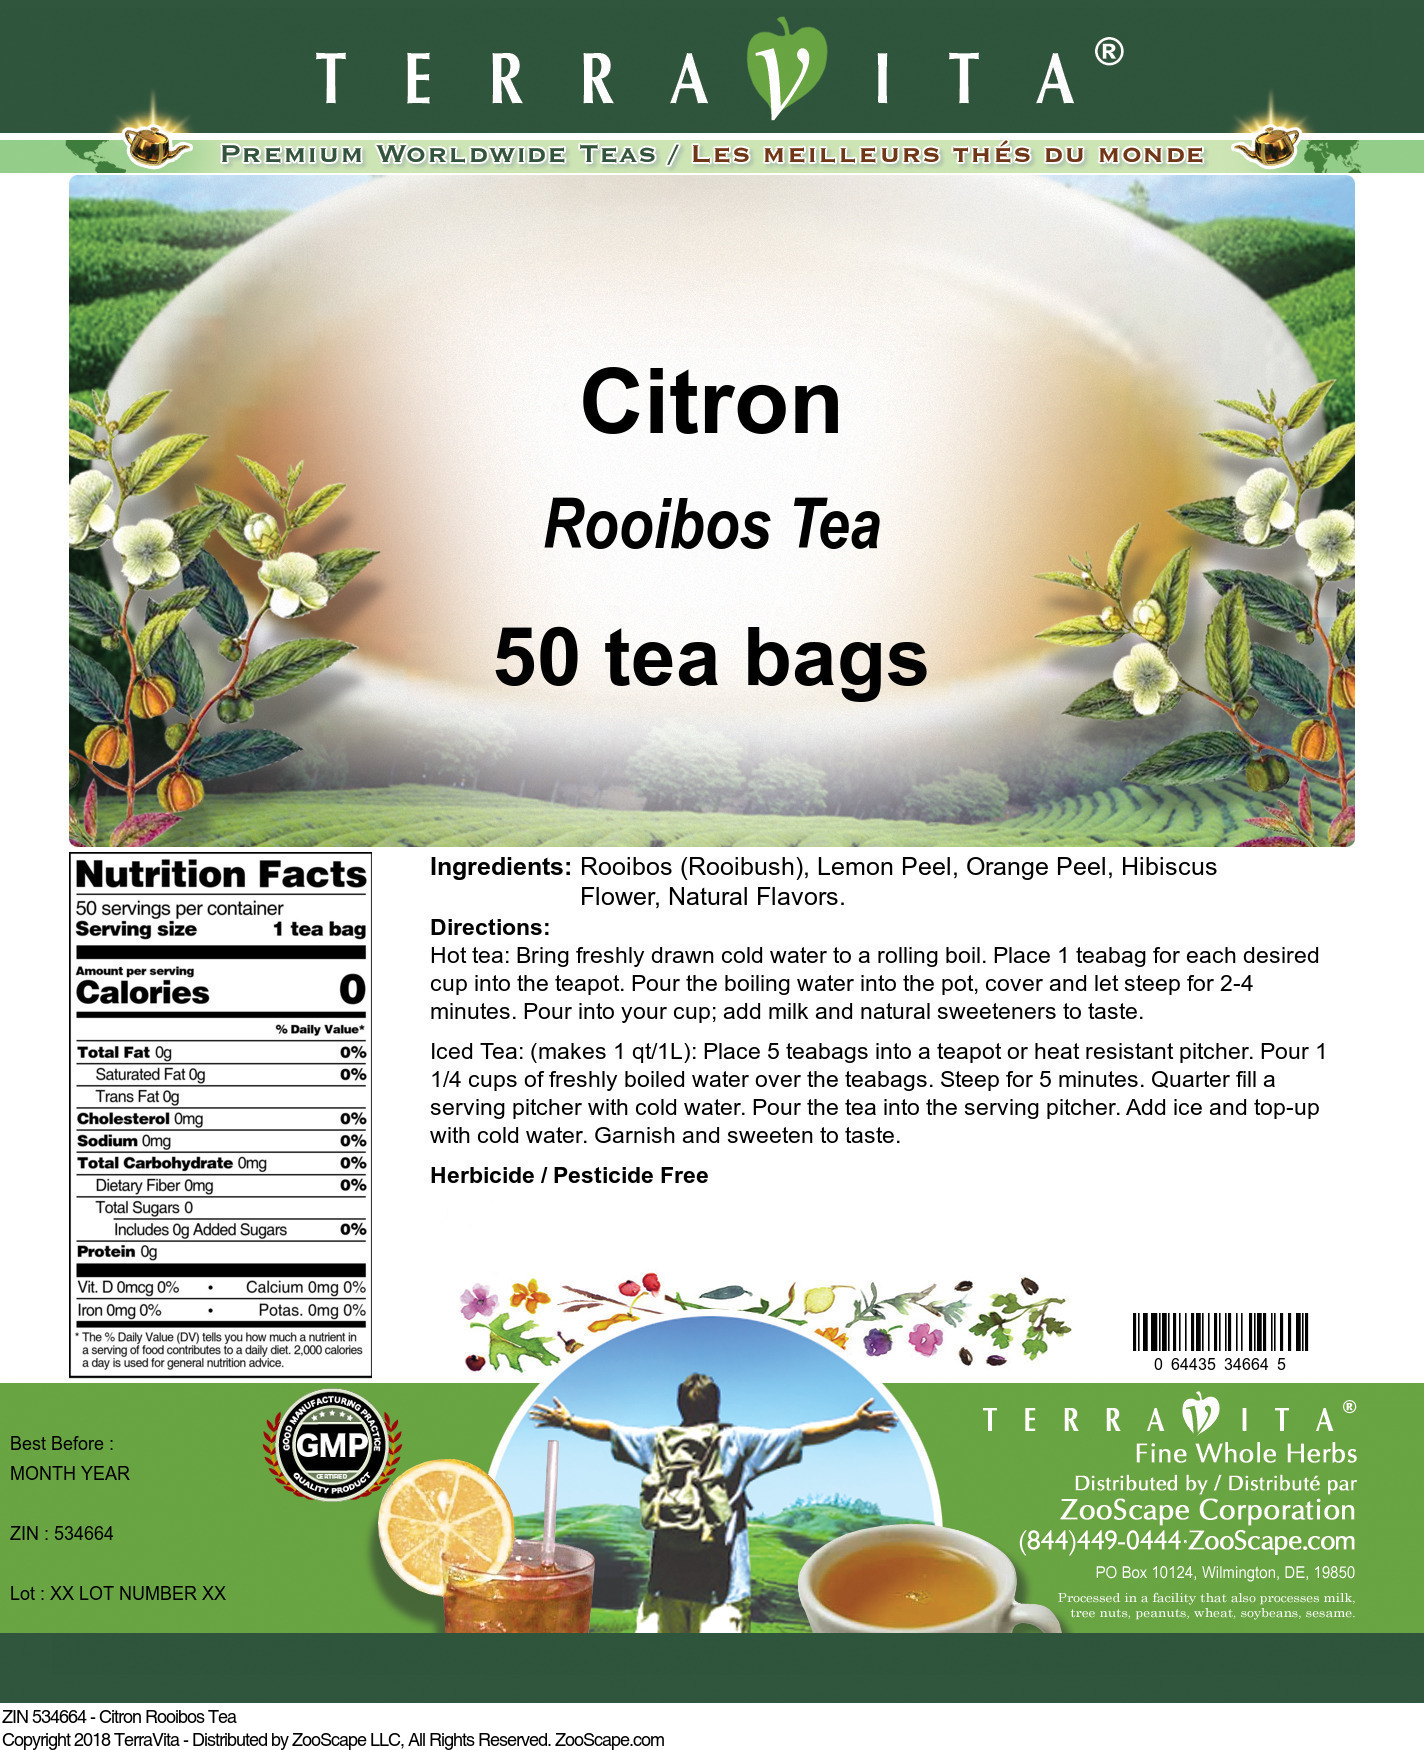 Citron Rooibos Tea - Label